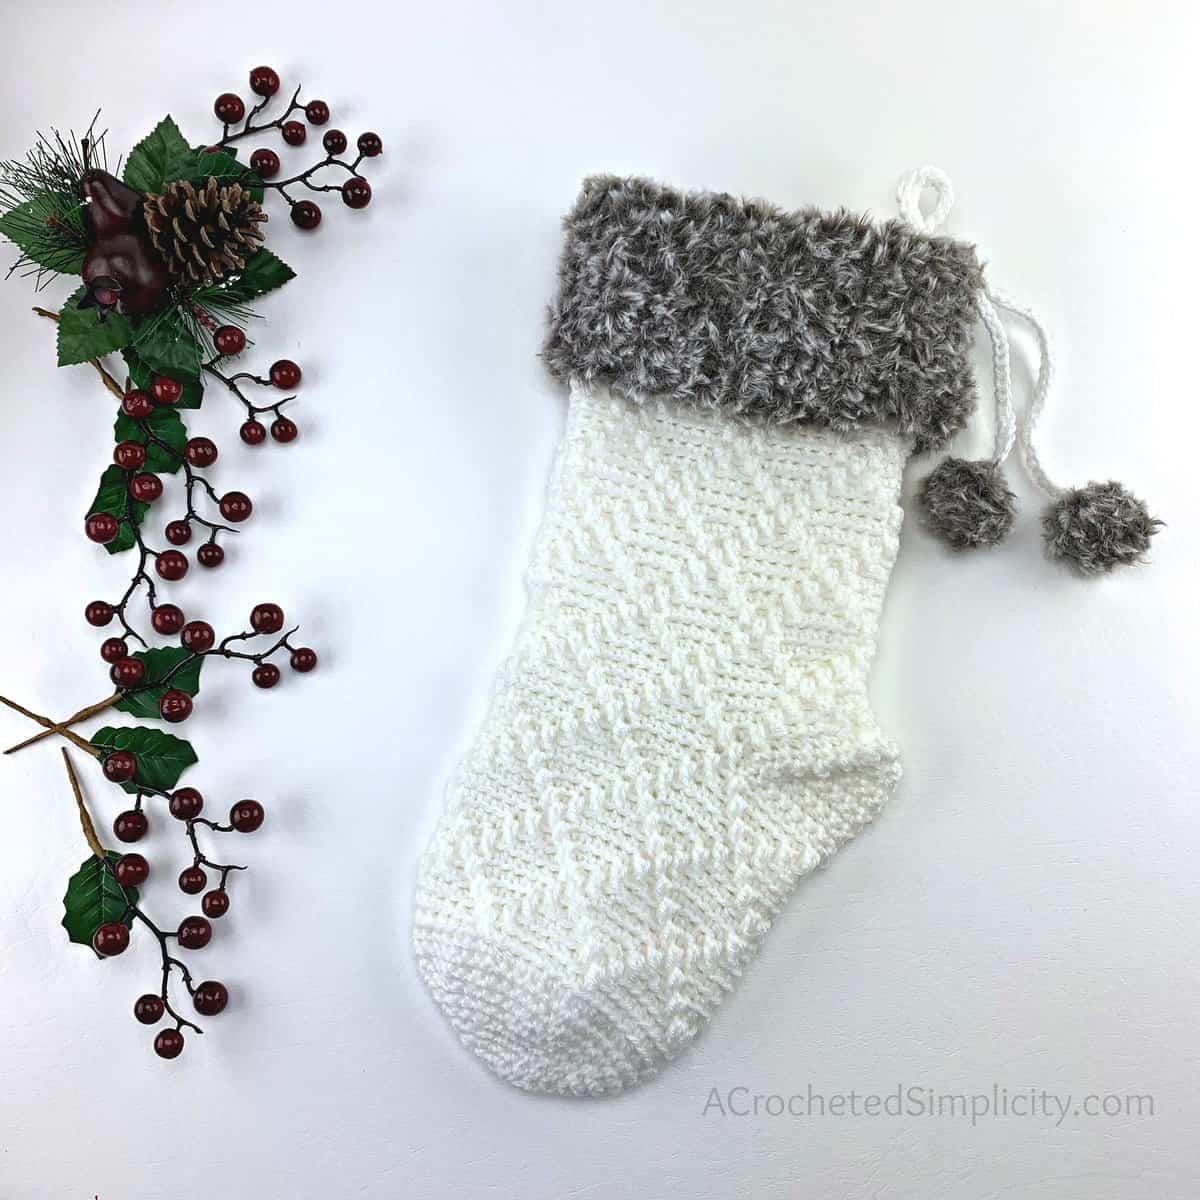 Free Crochet Pattern - Diamonds & Fur Christmas Stocking by A Crocheted Simplicity #freecrochetstockingpattern #freecrochetpattern #crochetchristmas #christmasstockingpattern #crochet #handmadestocking